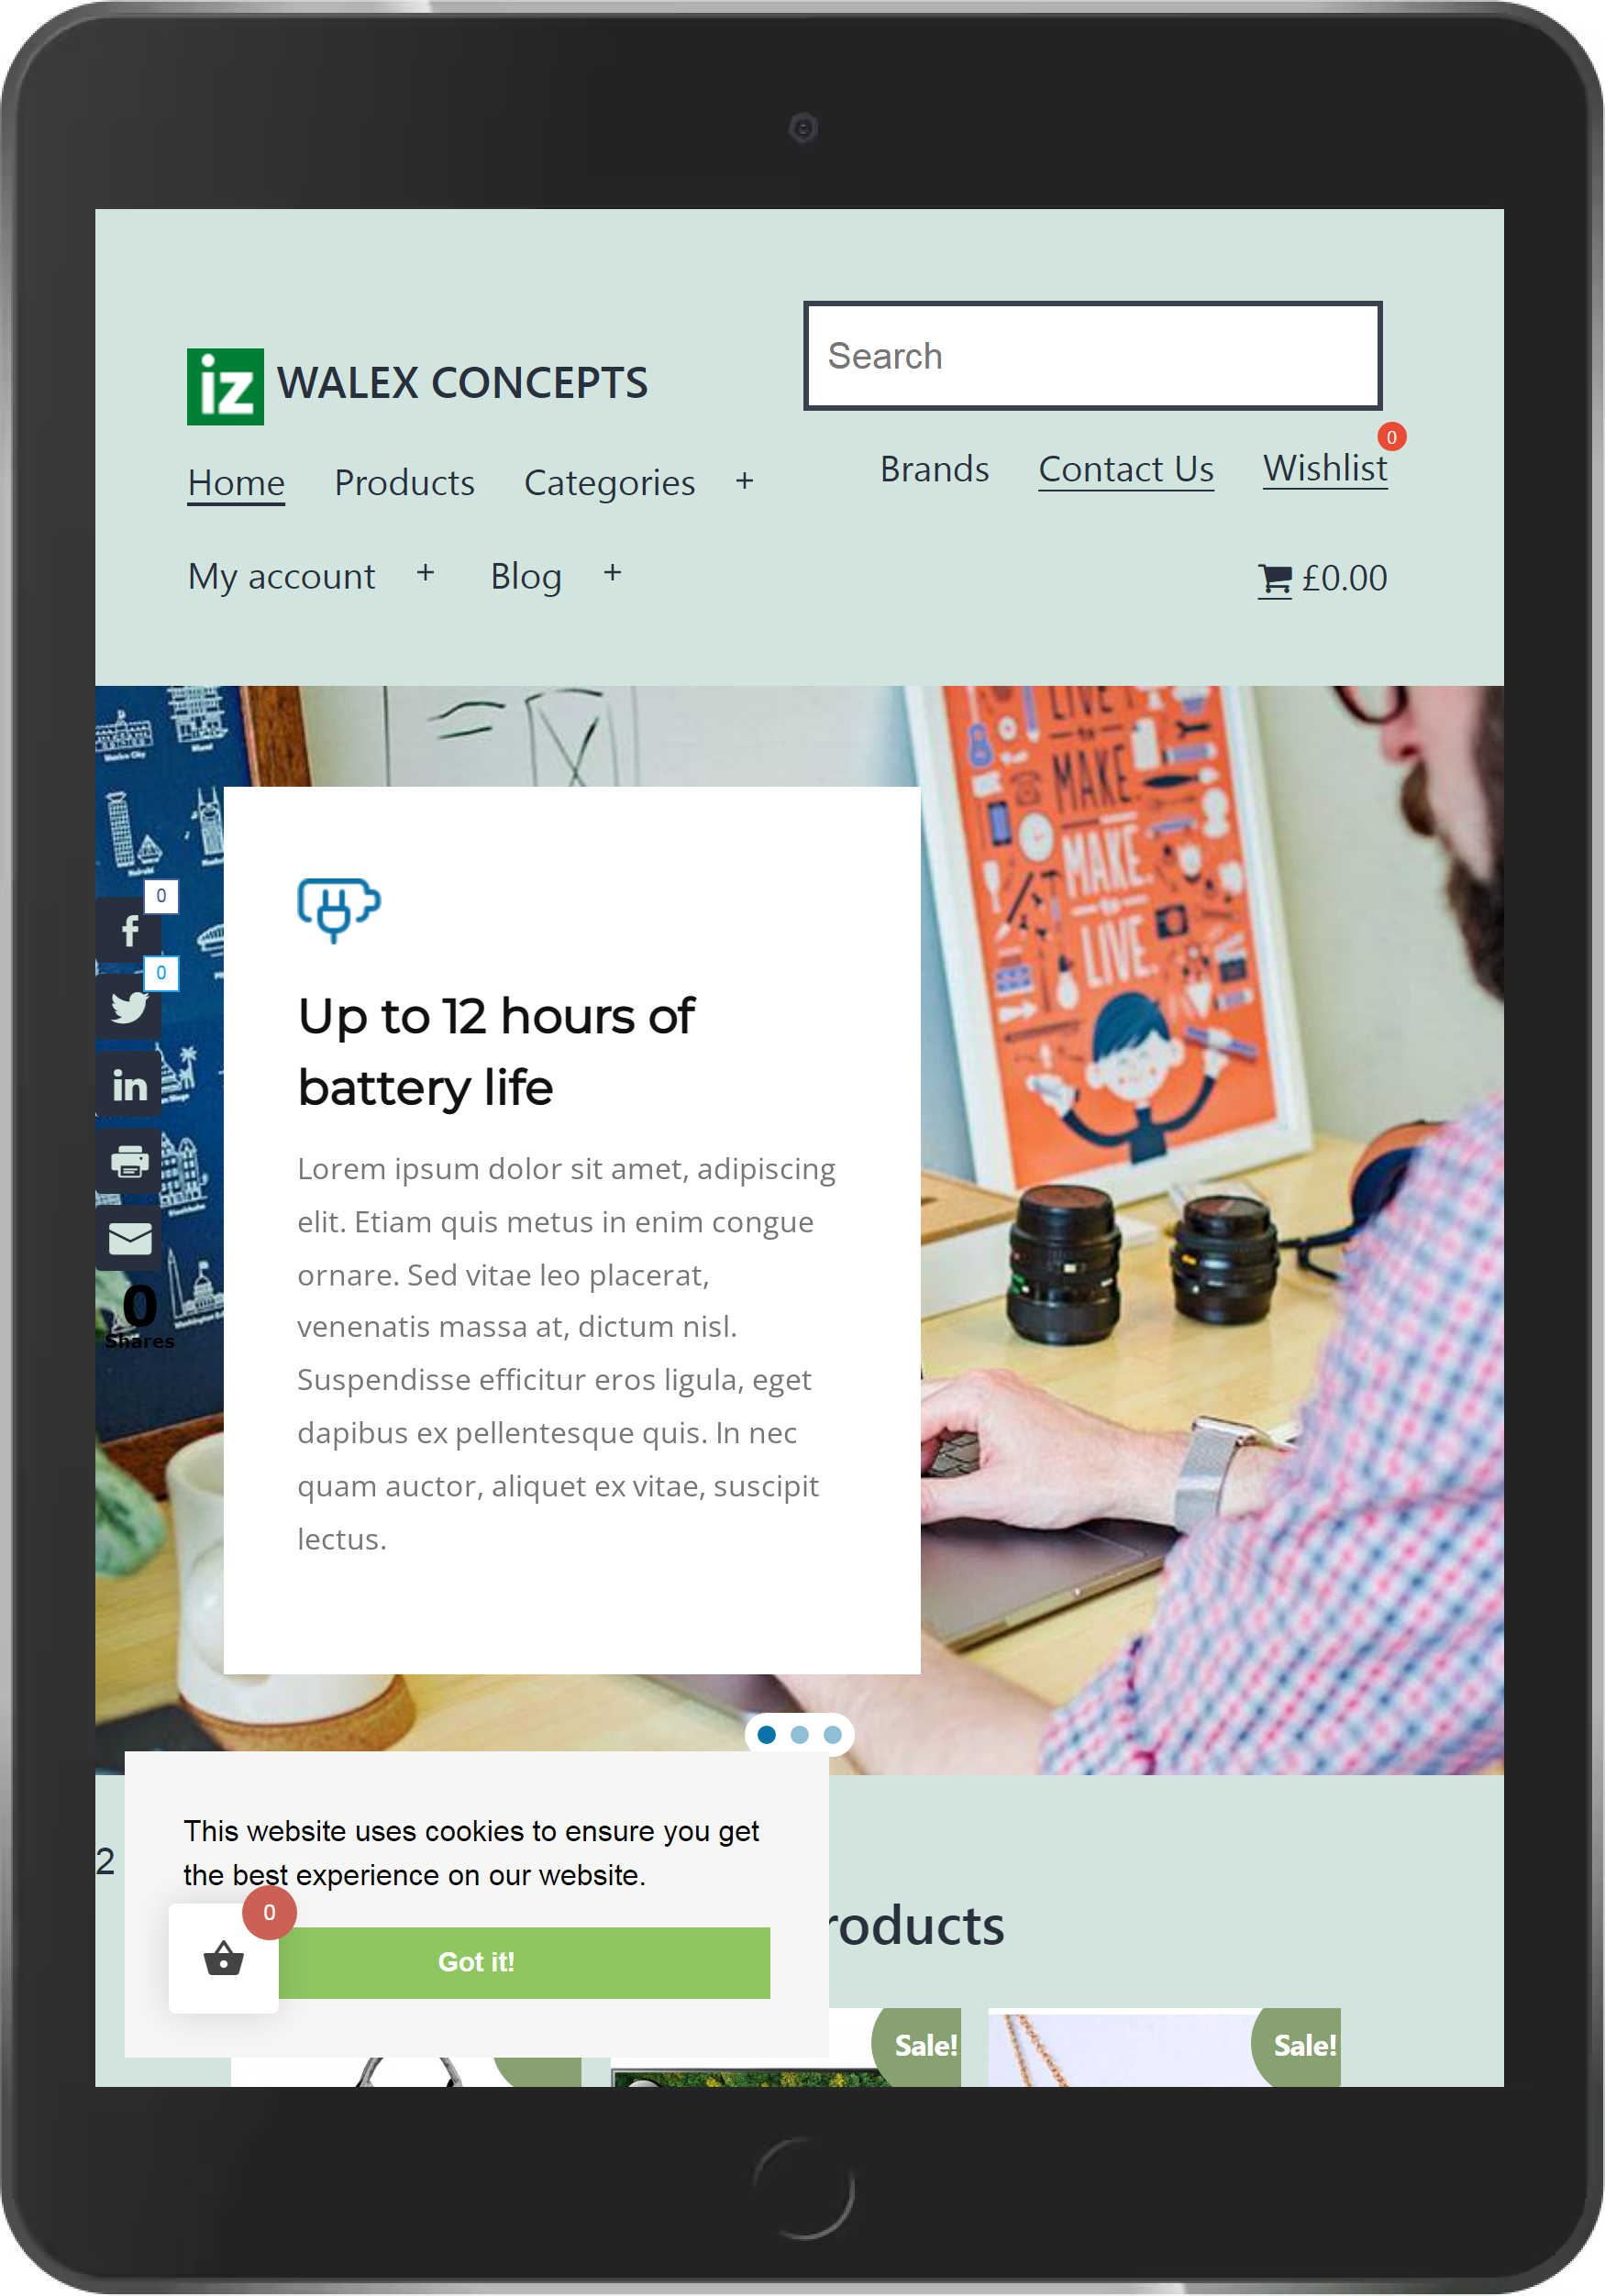 Screenshot-4 Responsive layout - tablet